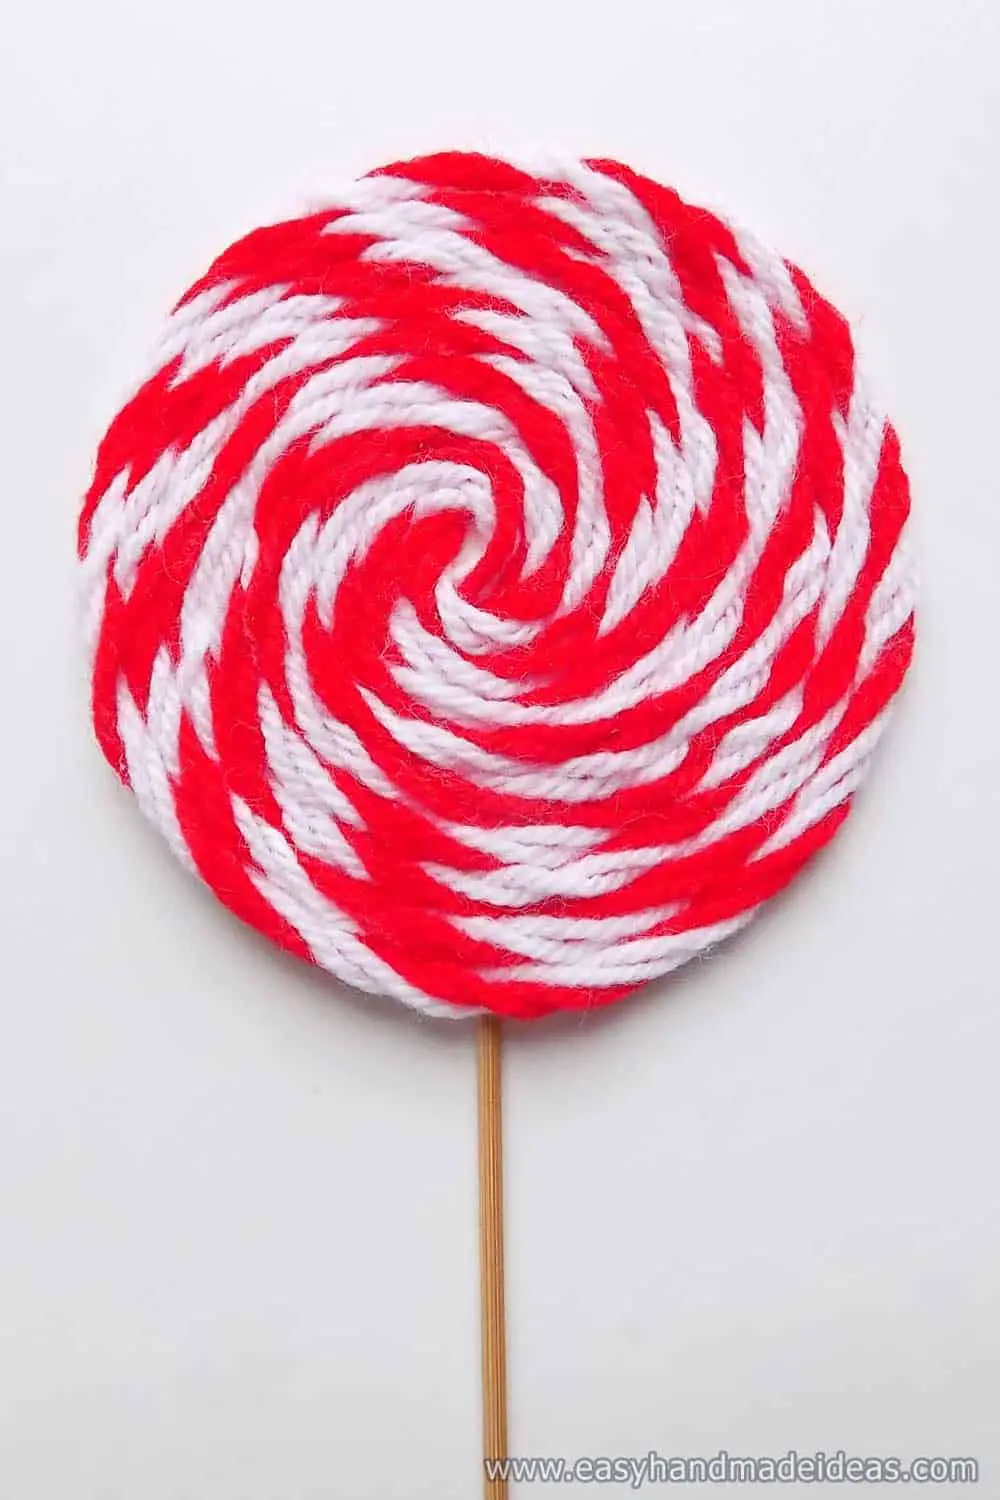 Lollipop from Threads